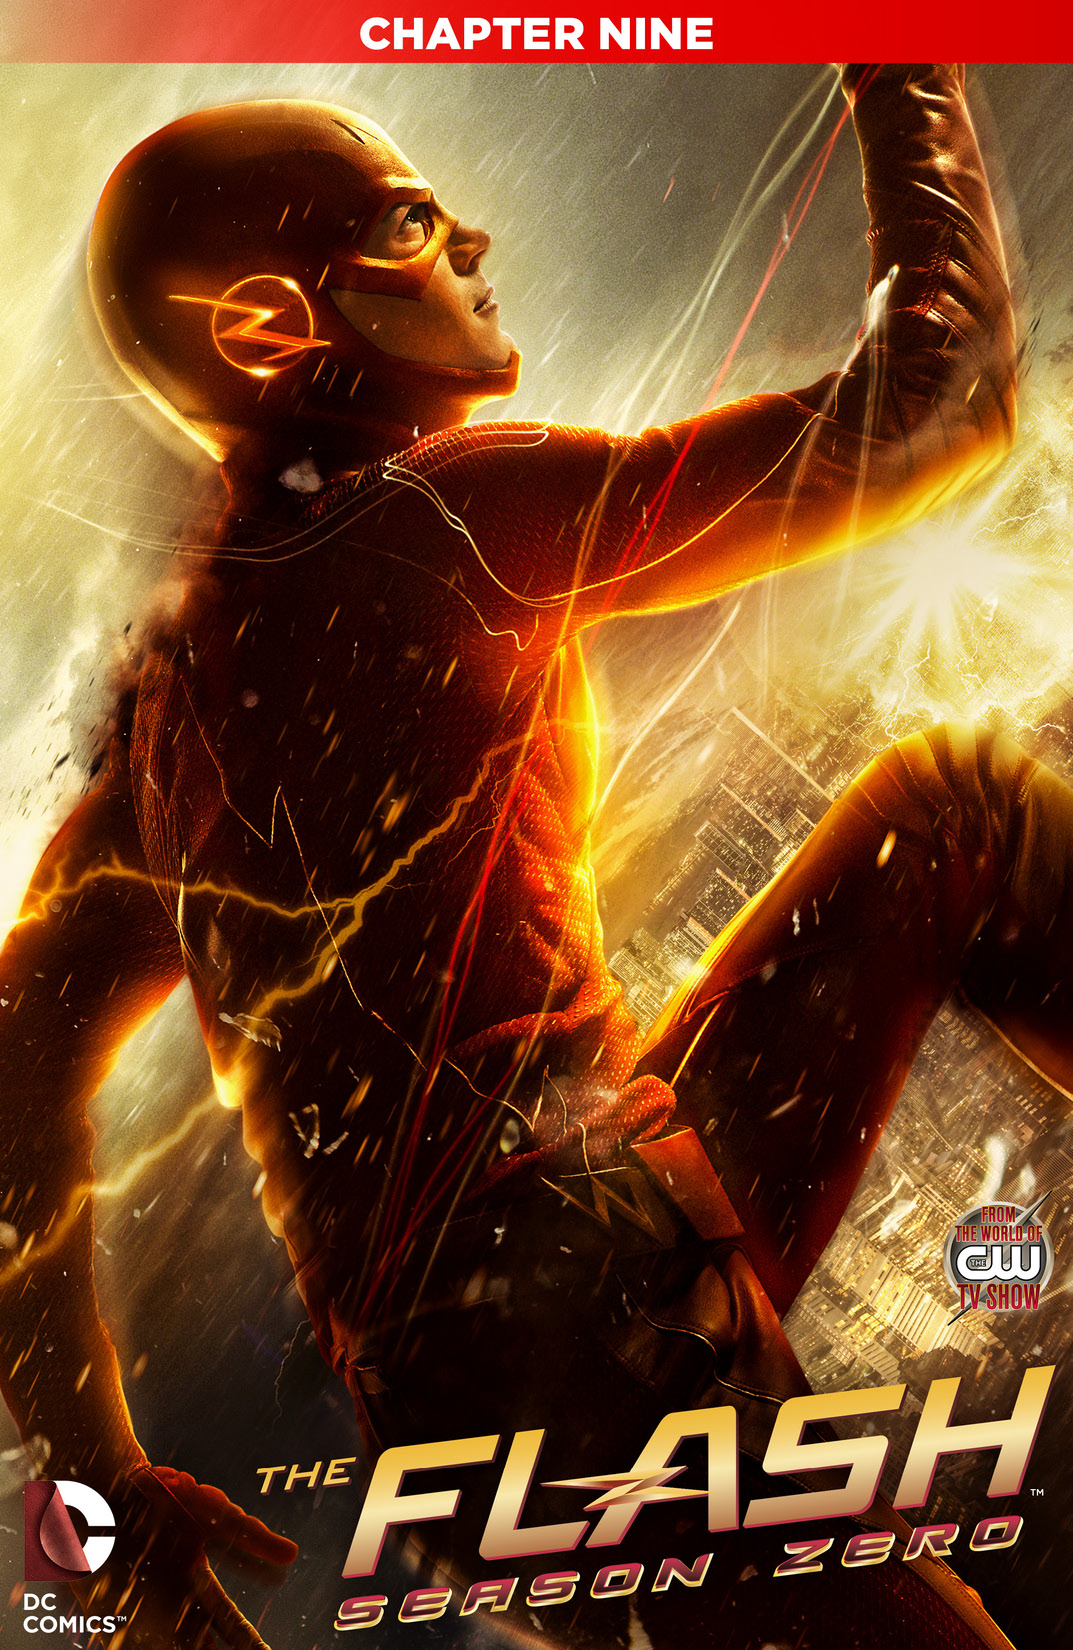 The Flash: Season Zero #9 preview images